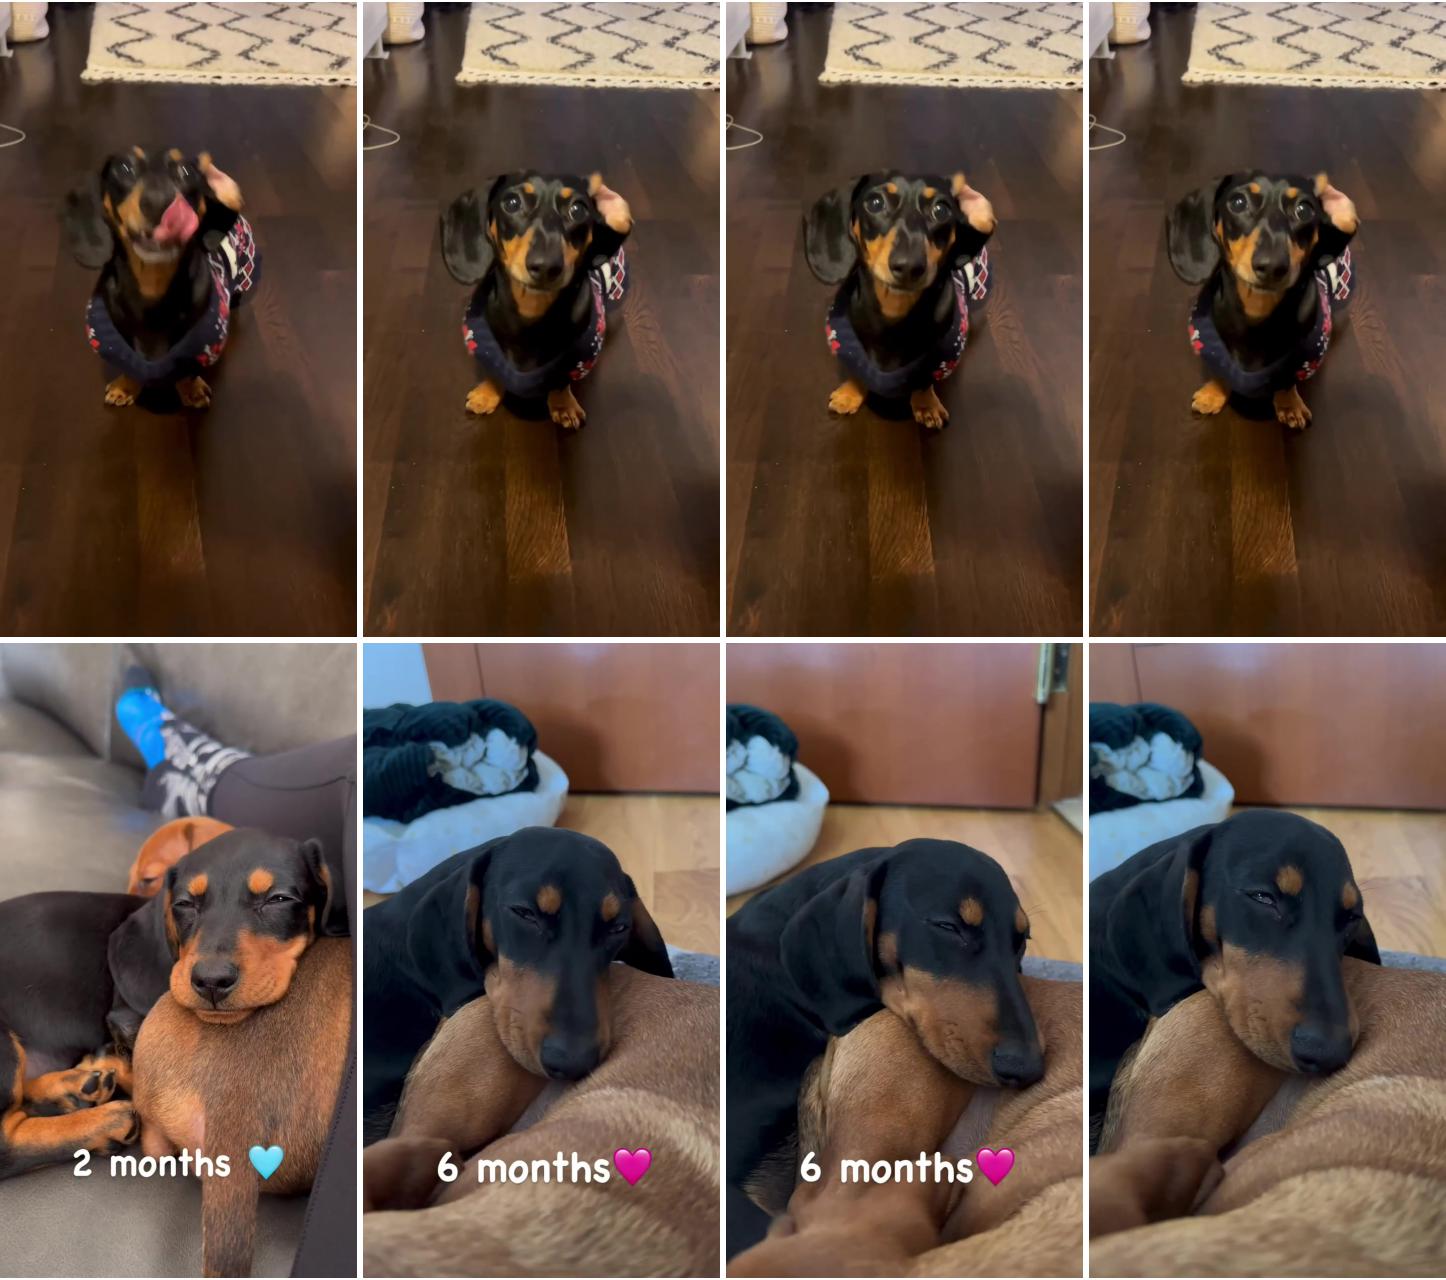 Dachshund videos; dachshund funny videos